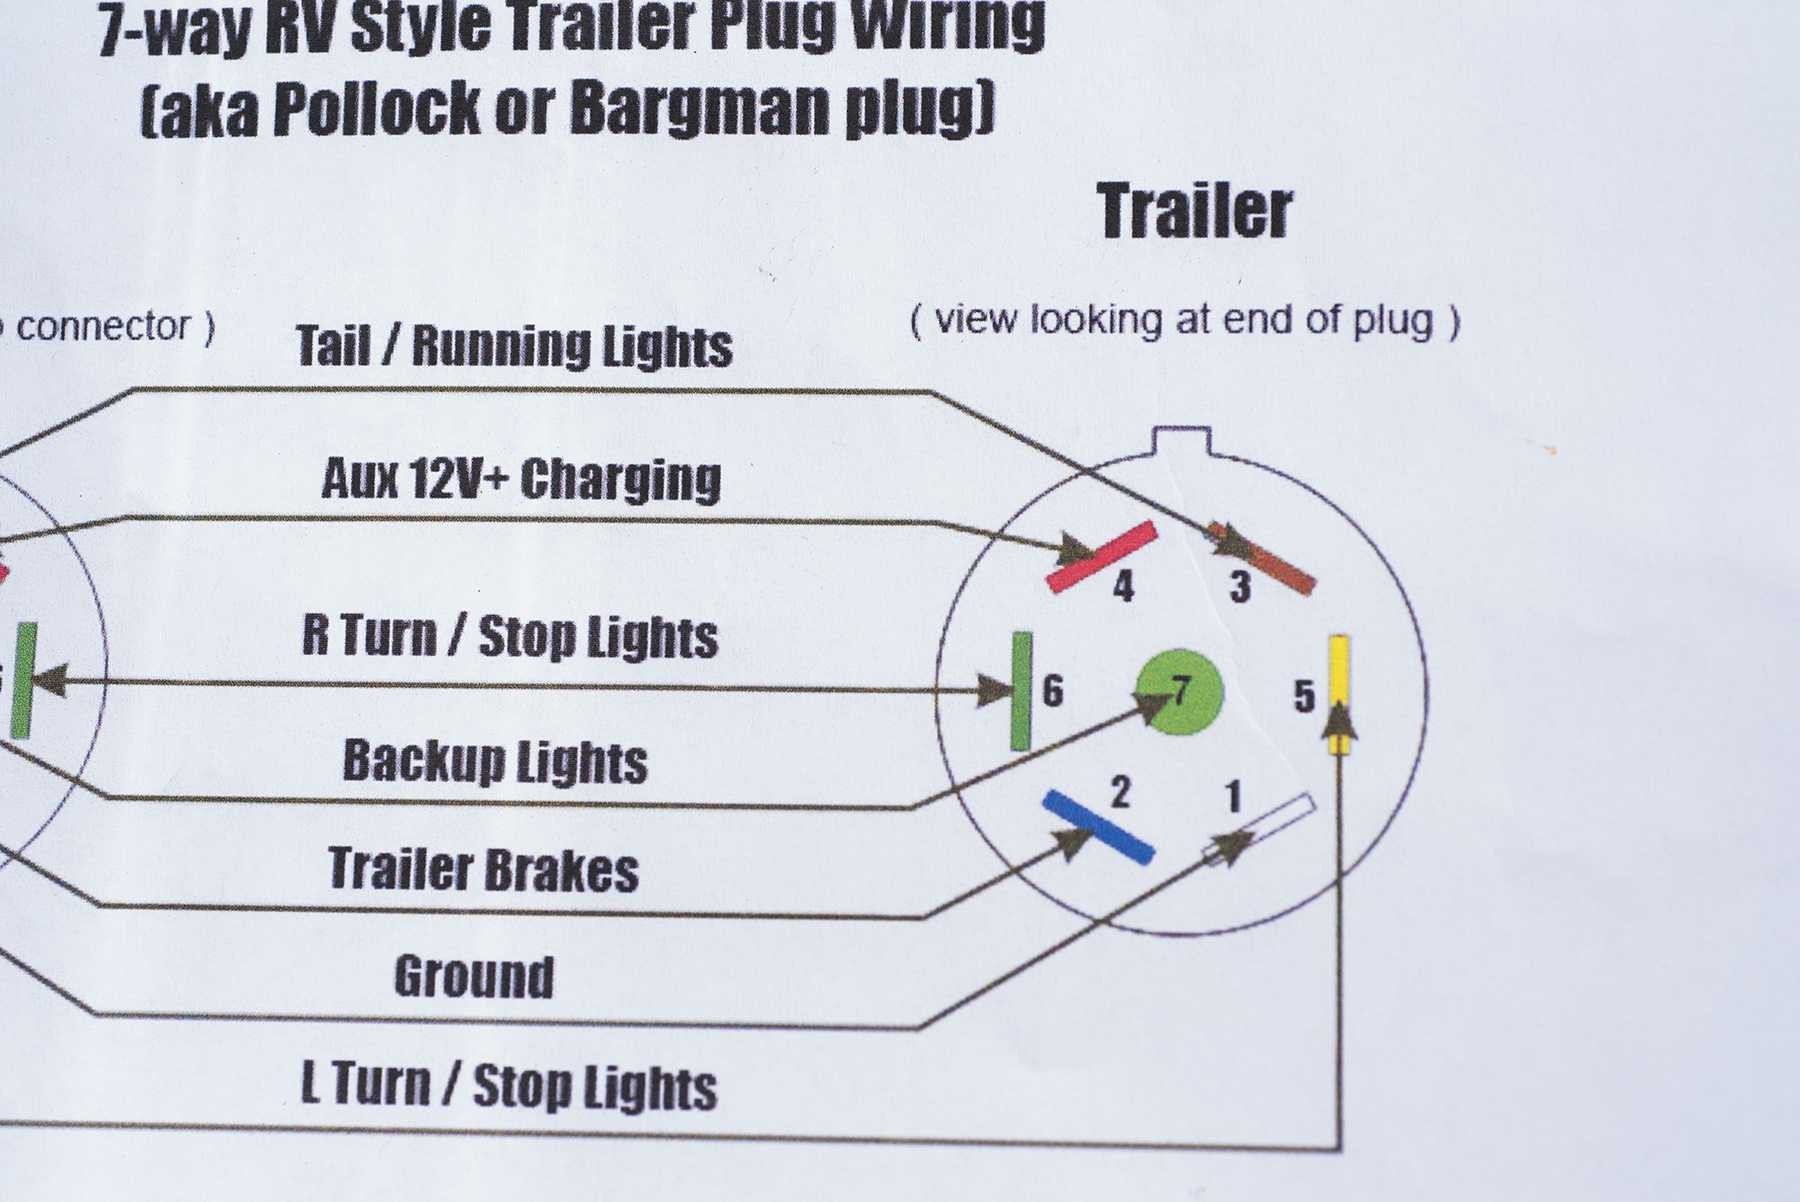 Hopkins Trailer Plug Wiring Diagram Rv Connector Wiring Diagram Wiring Data Of Hopkins Trailer Plug Wiring Diagram